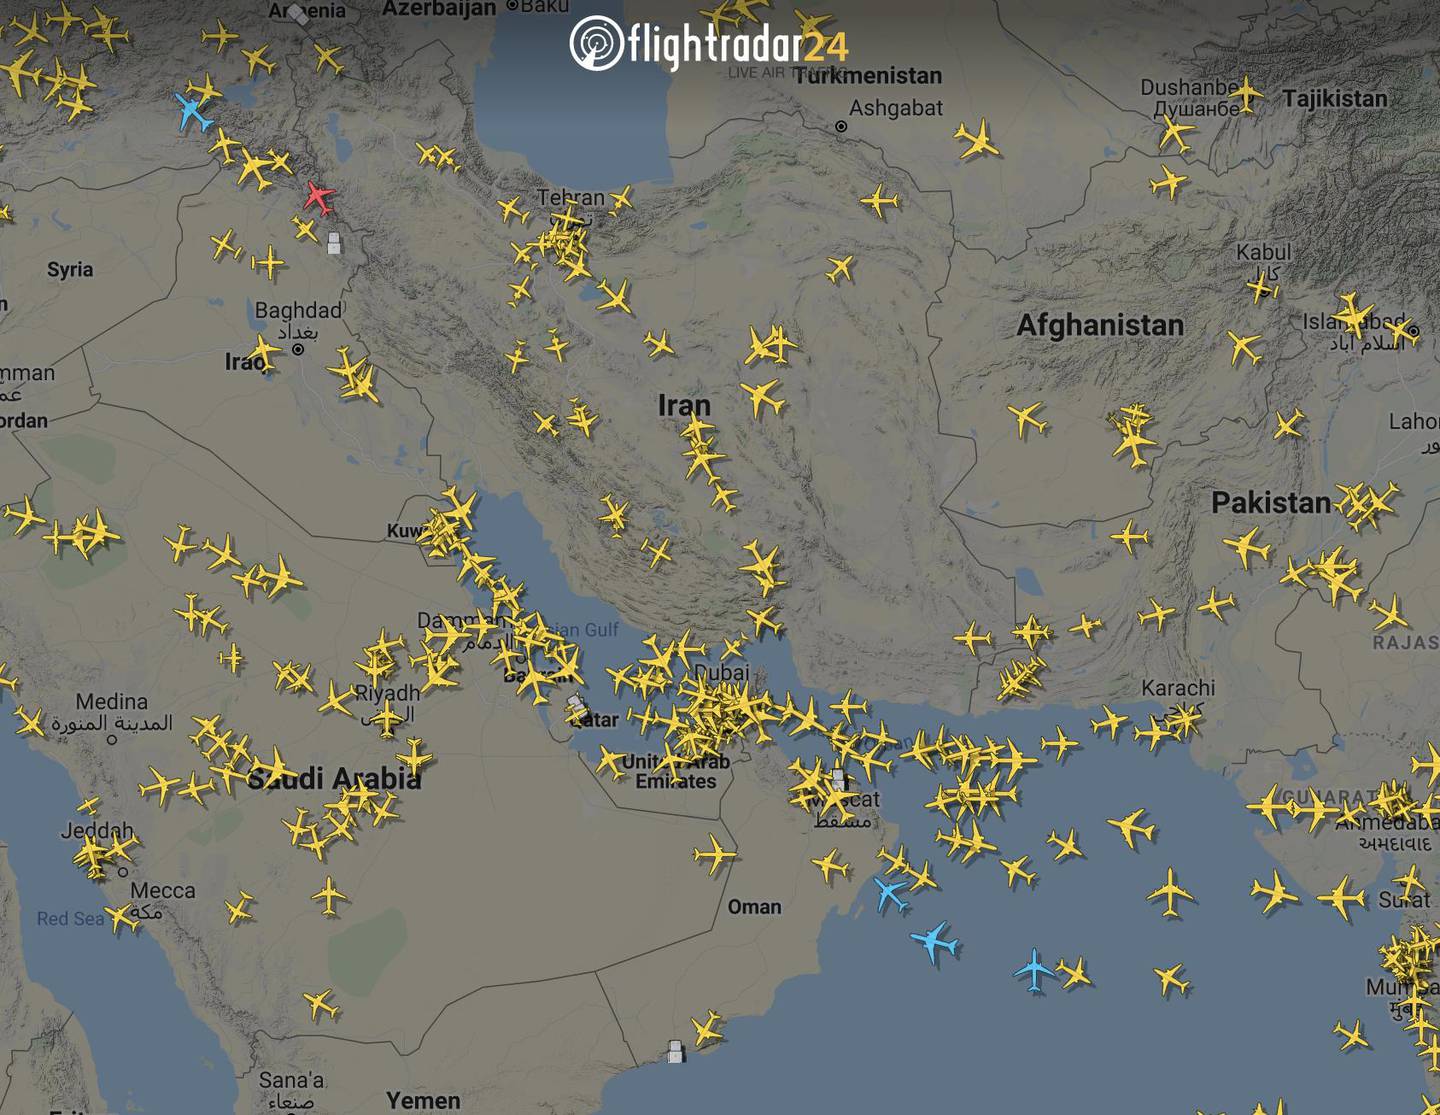 Air traffic above the UAE in January 2021. Courtesy FlightRadar24